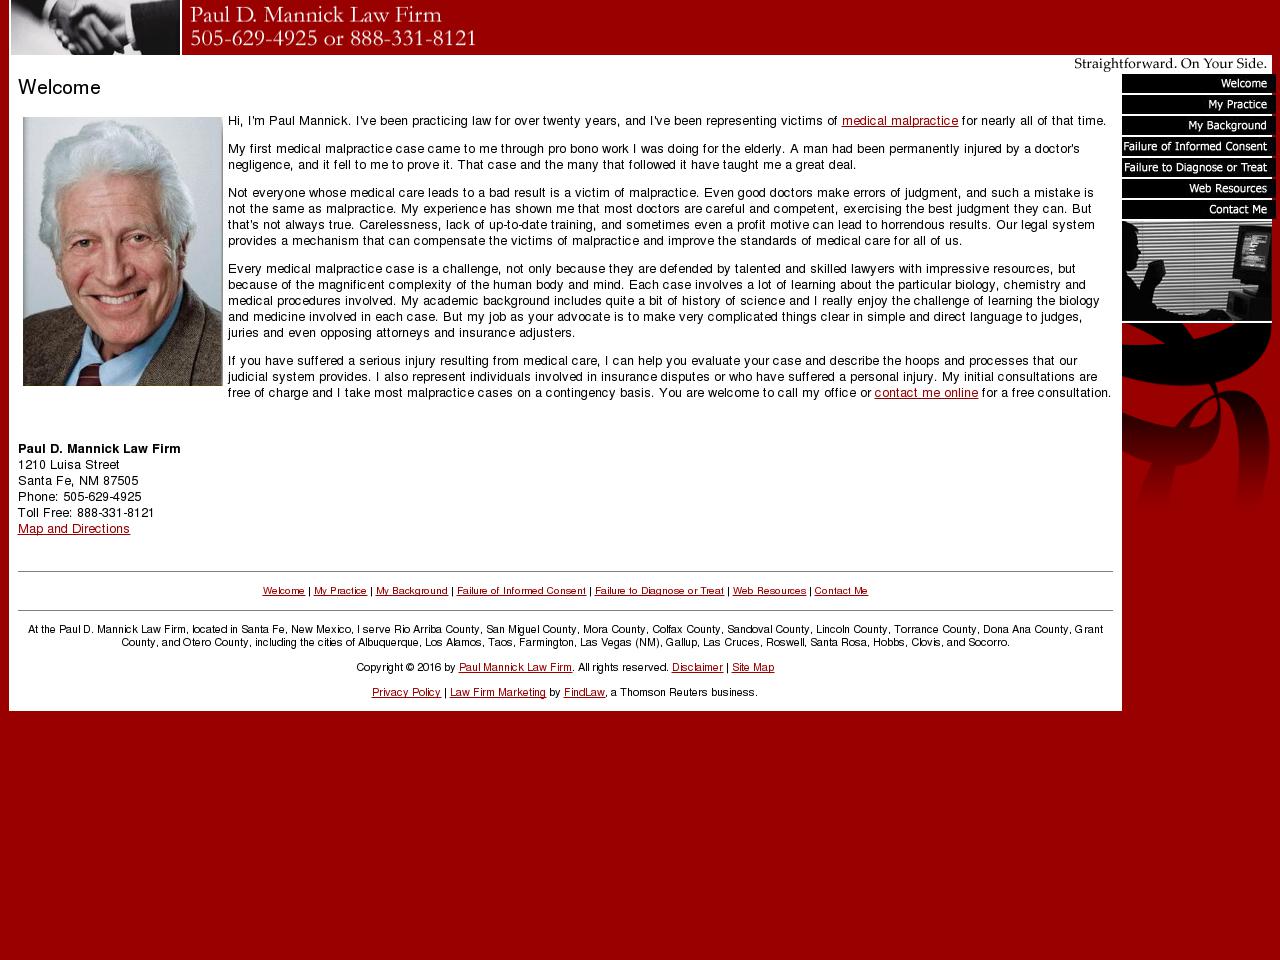 Paul Mannick Law Firm - Santa Fe NM Lawyers